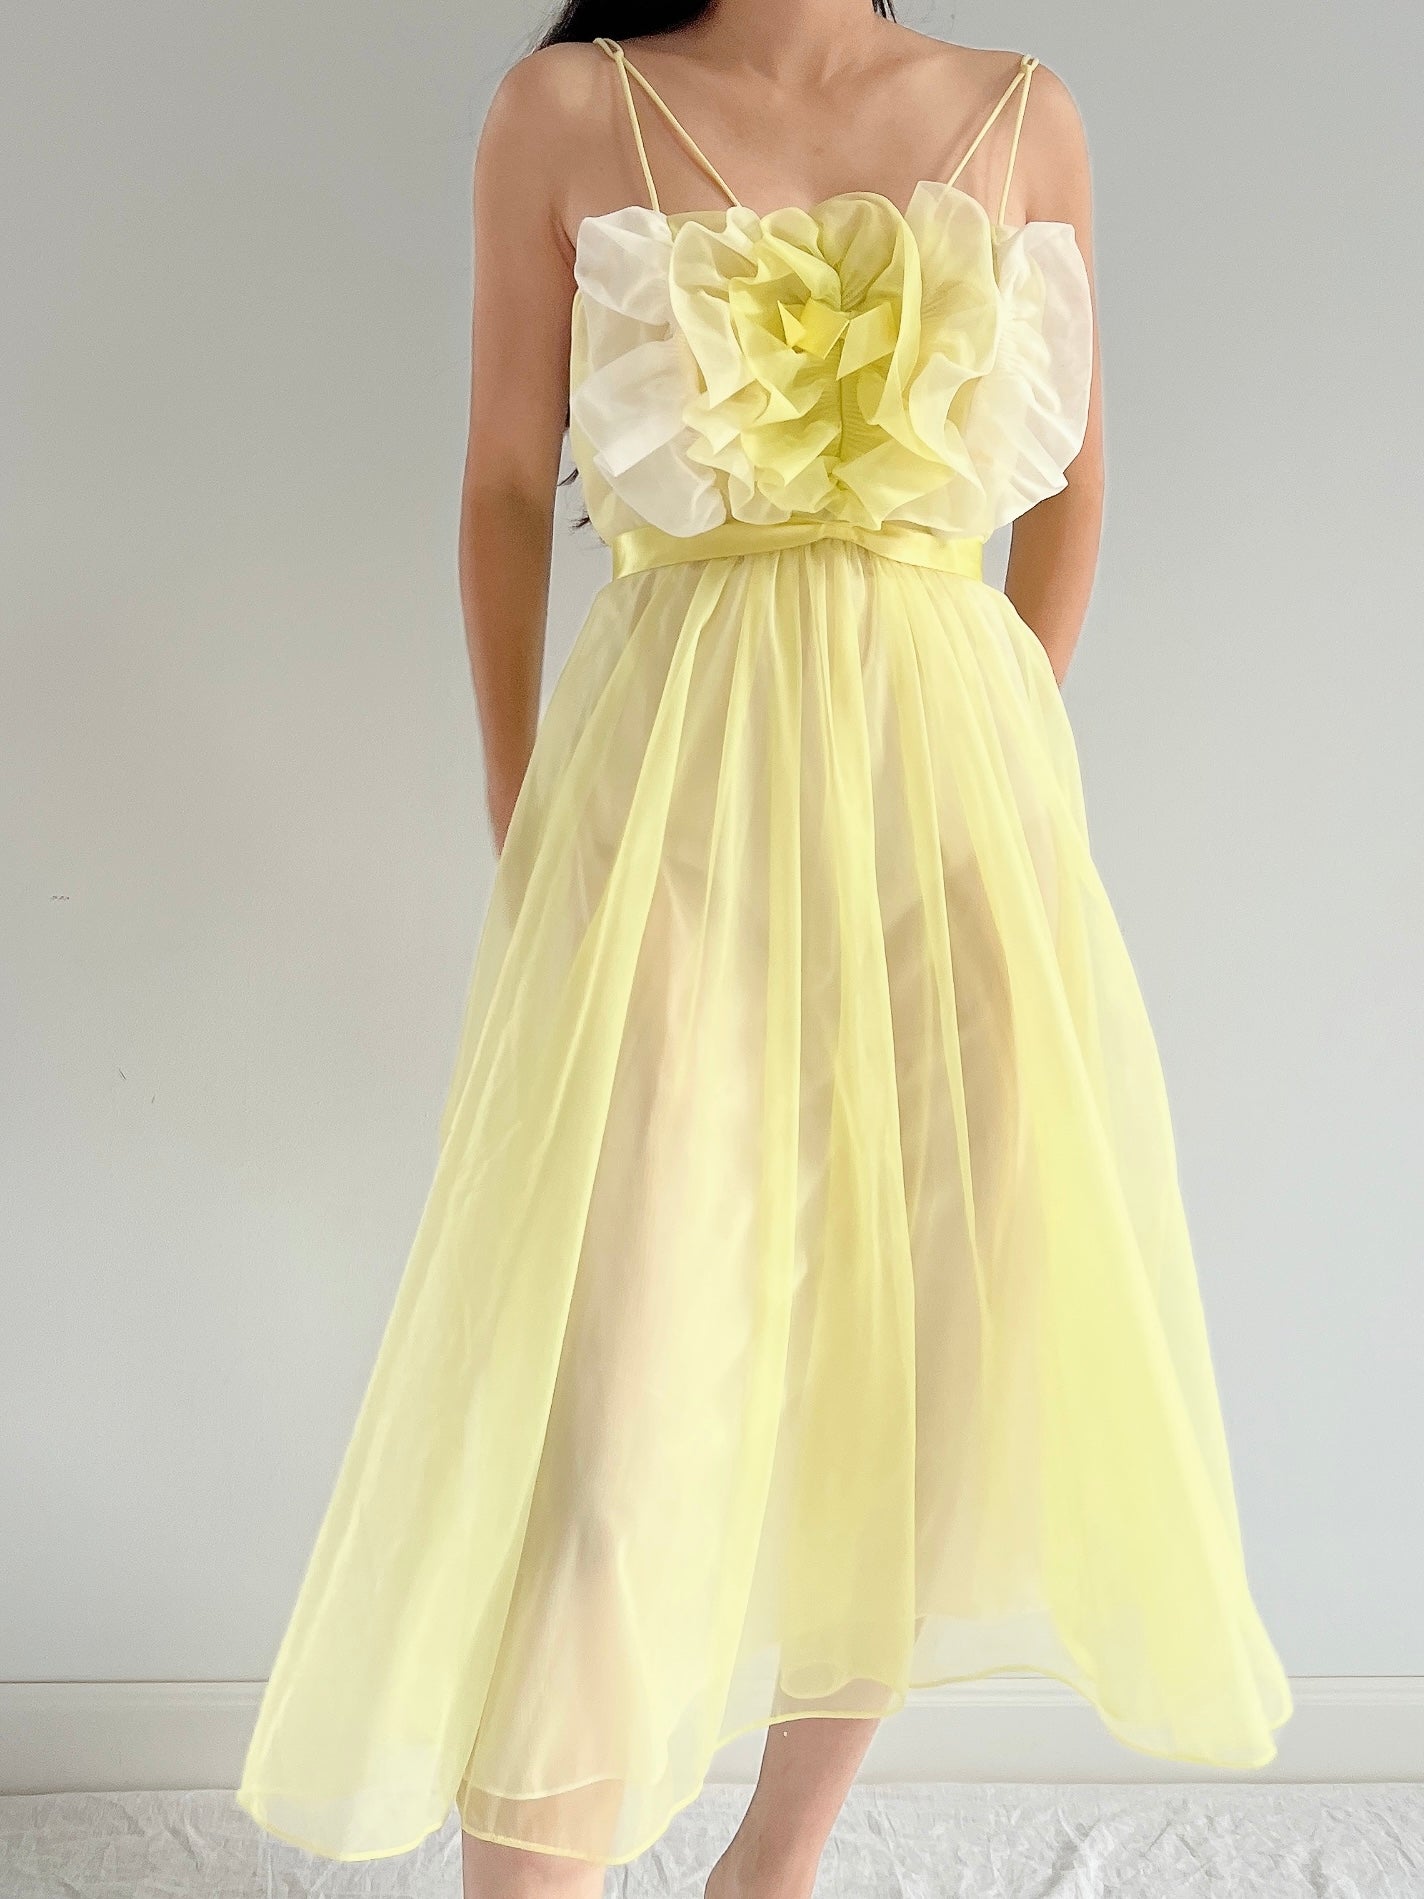 1950s Ombre Chartreuse Ombré Ruffle Slip Dress - S